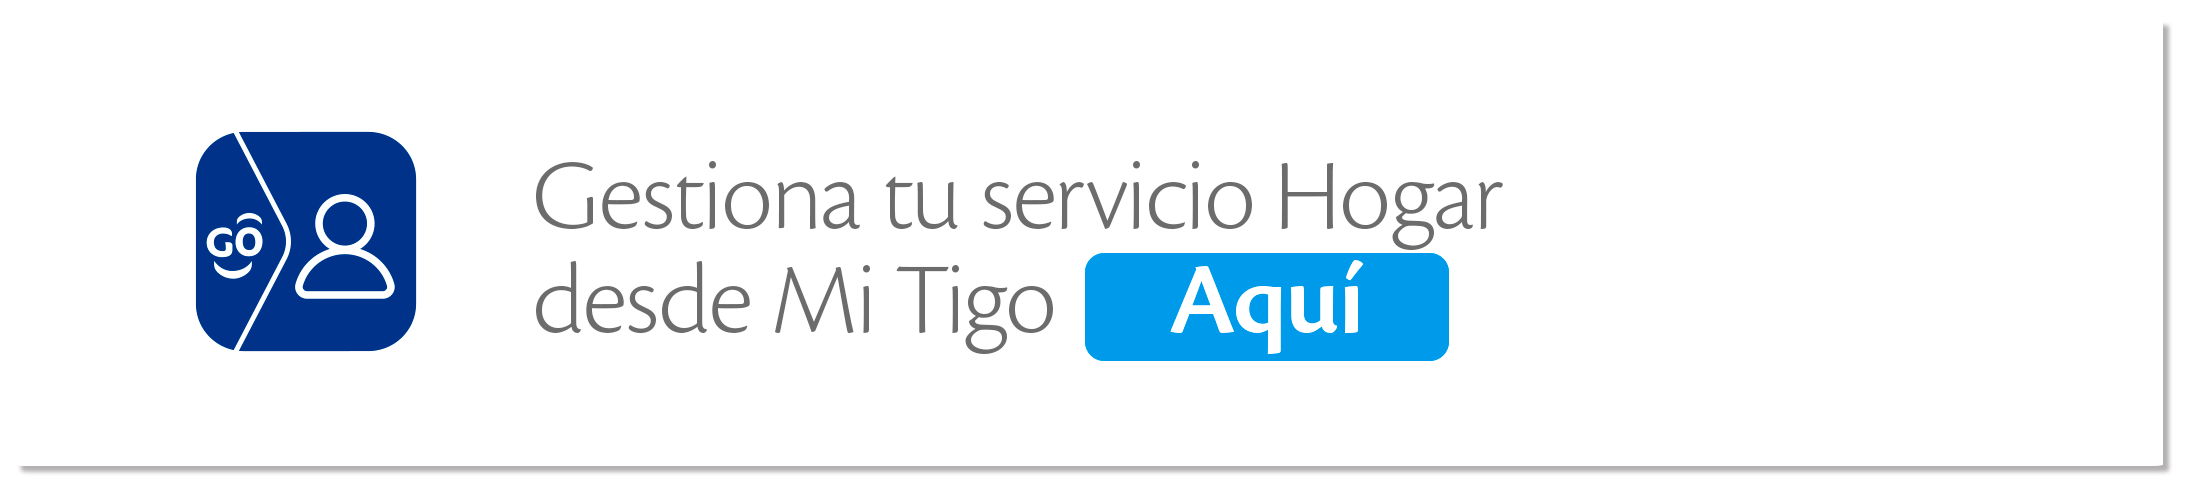 aw-gestiona_tu_servicio_desde_mi_tigo.png